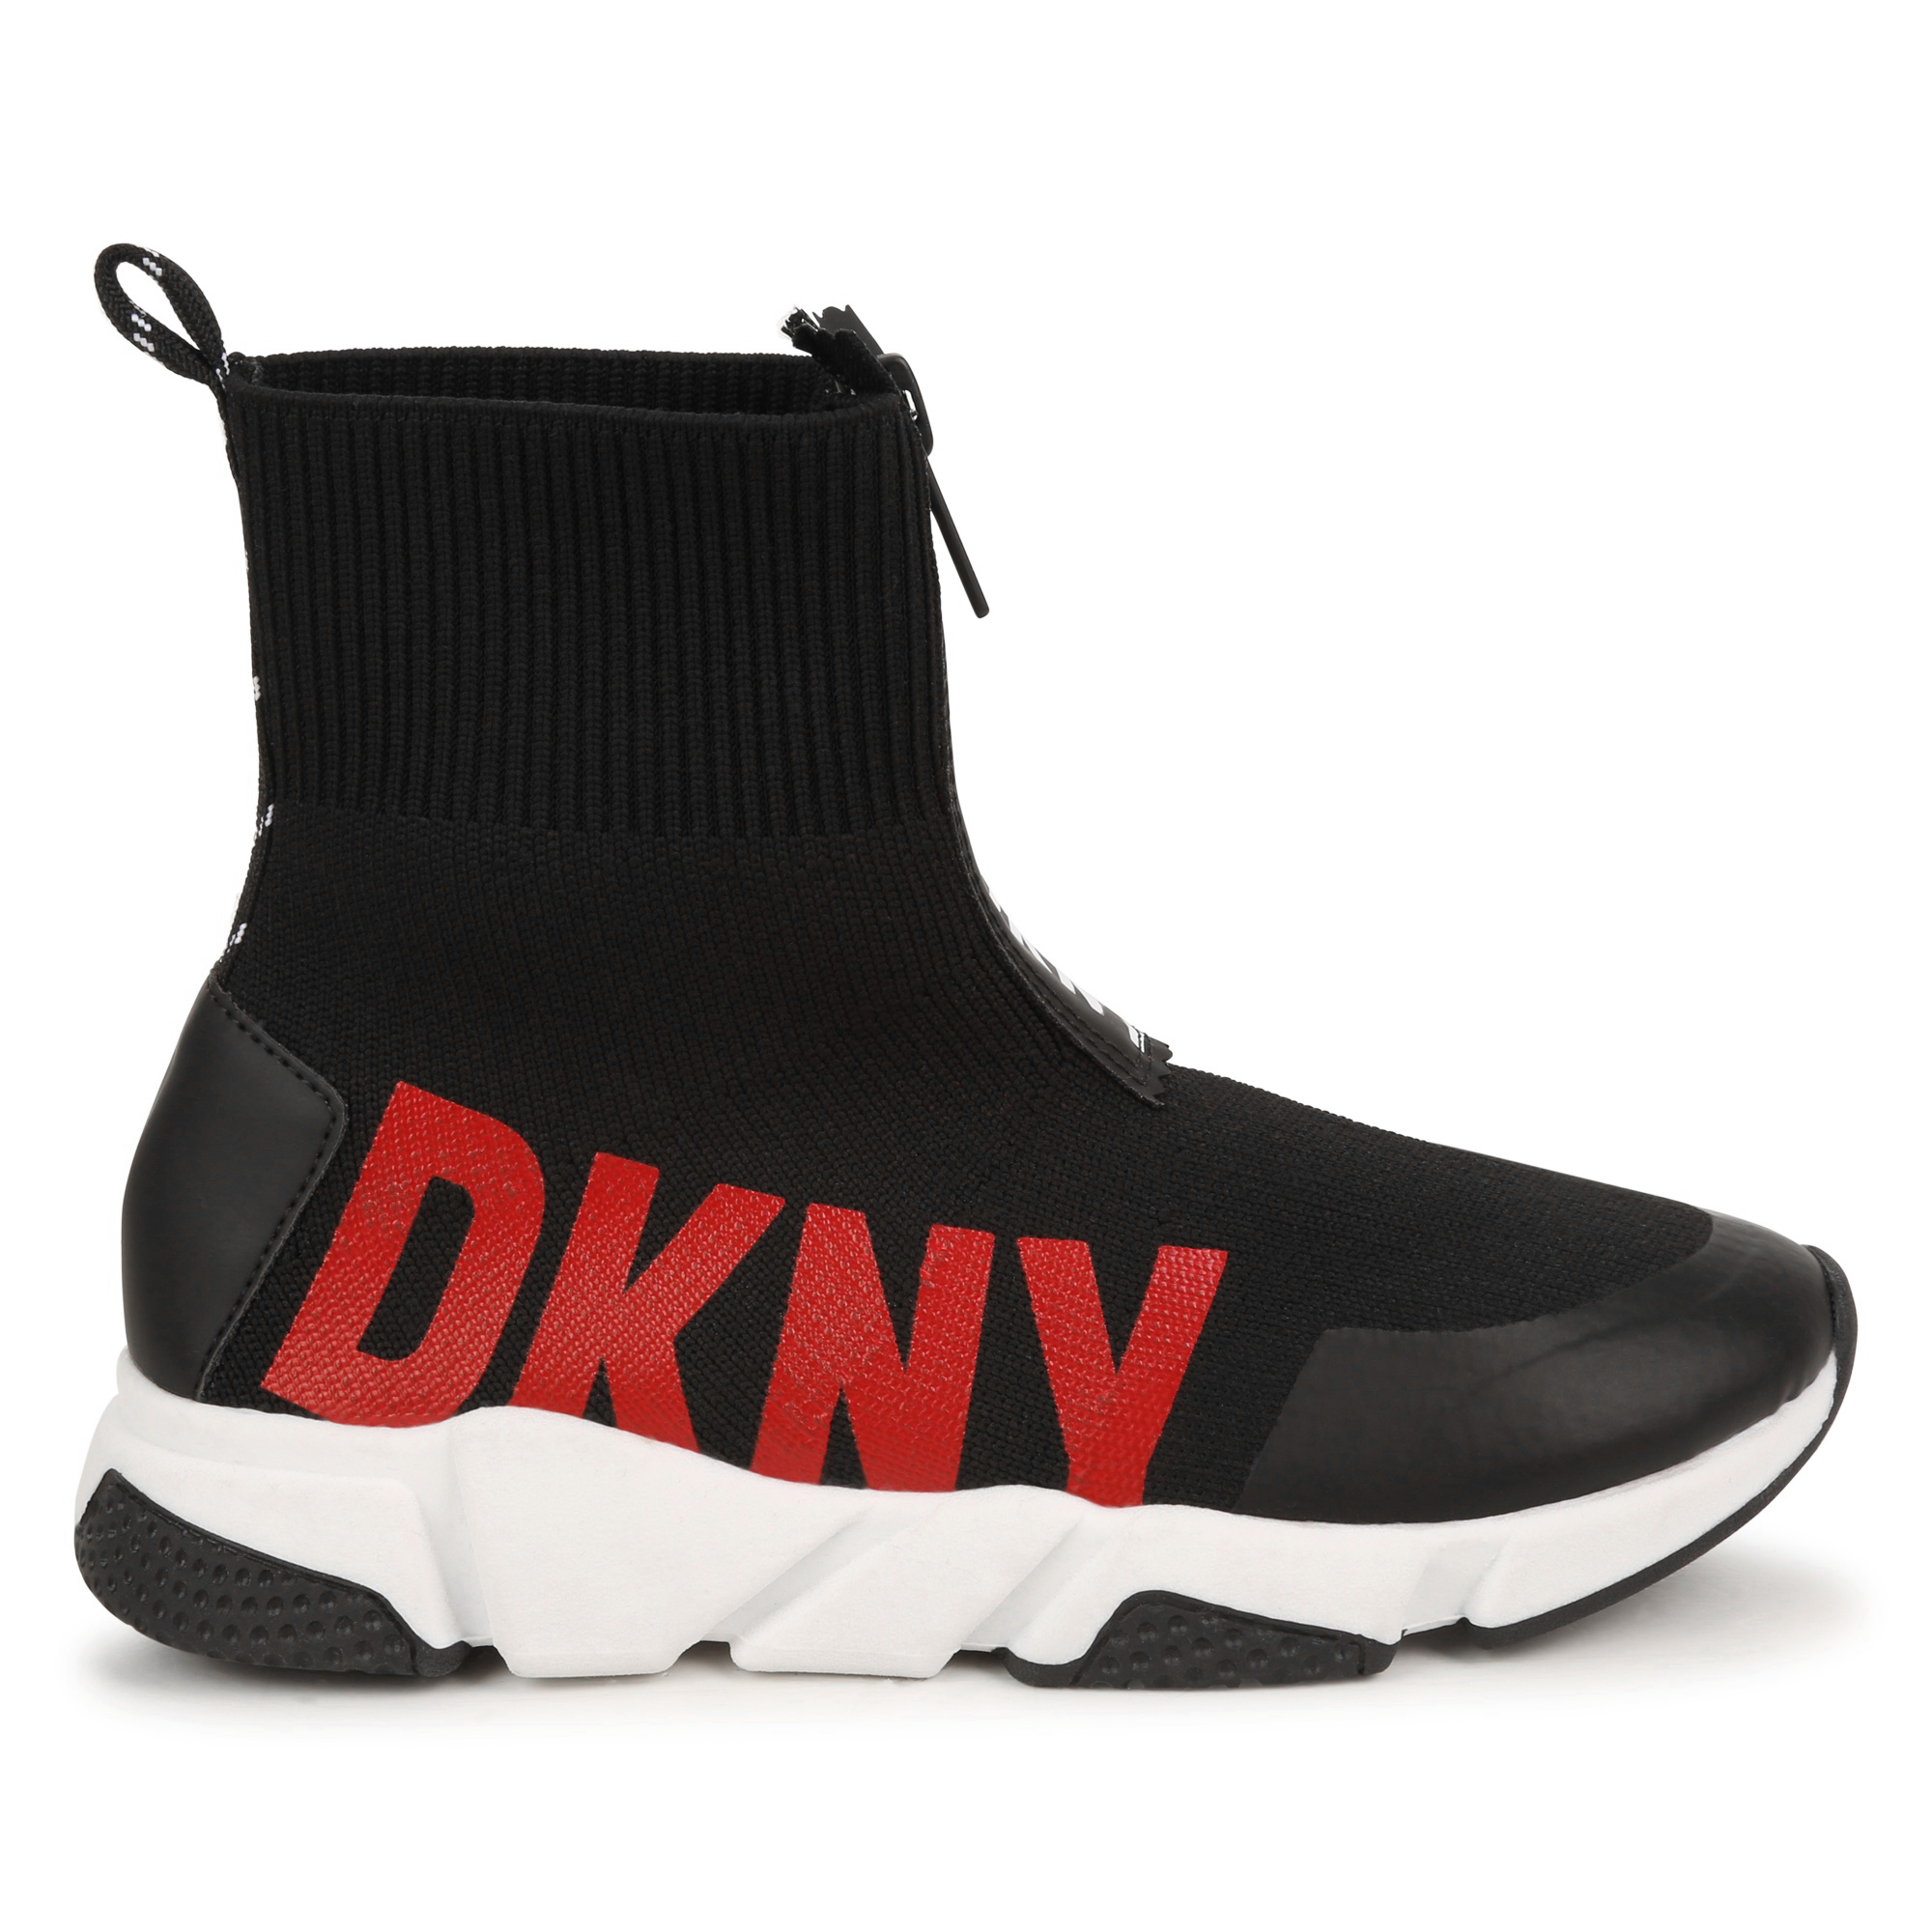 Sockensneaker DKNY Für UNISEX